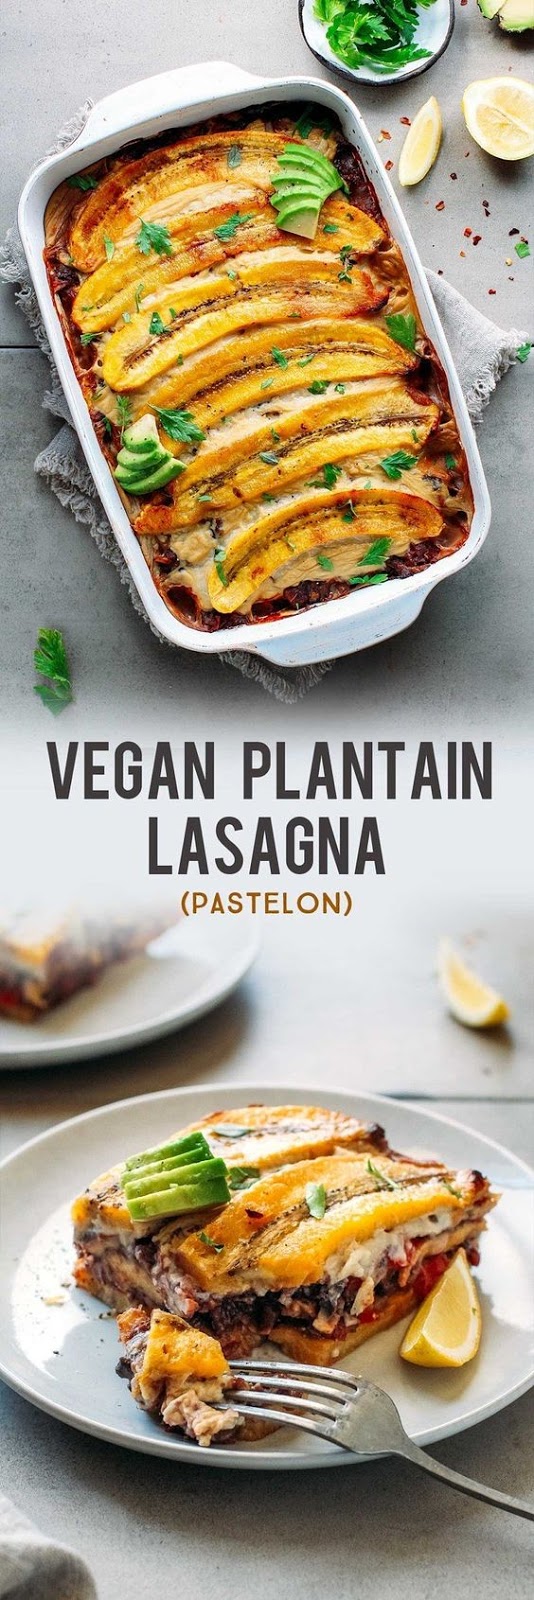 Vegan Plantain Lasagna (Pastelón)